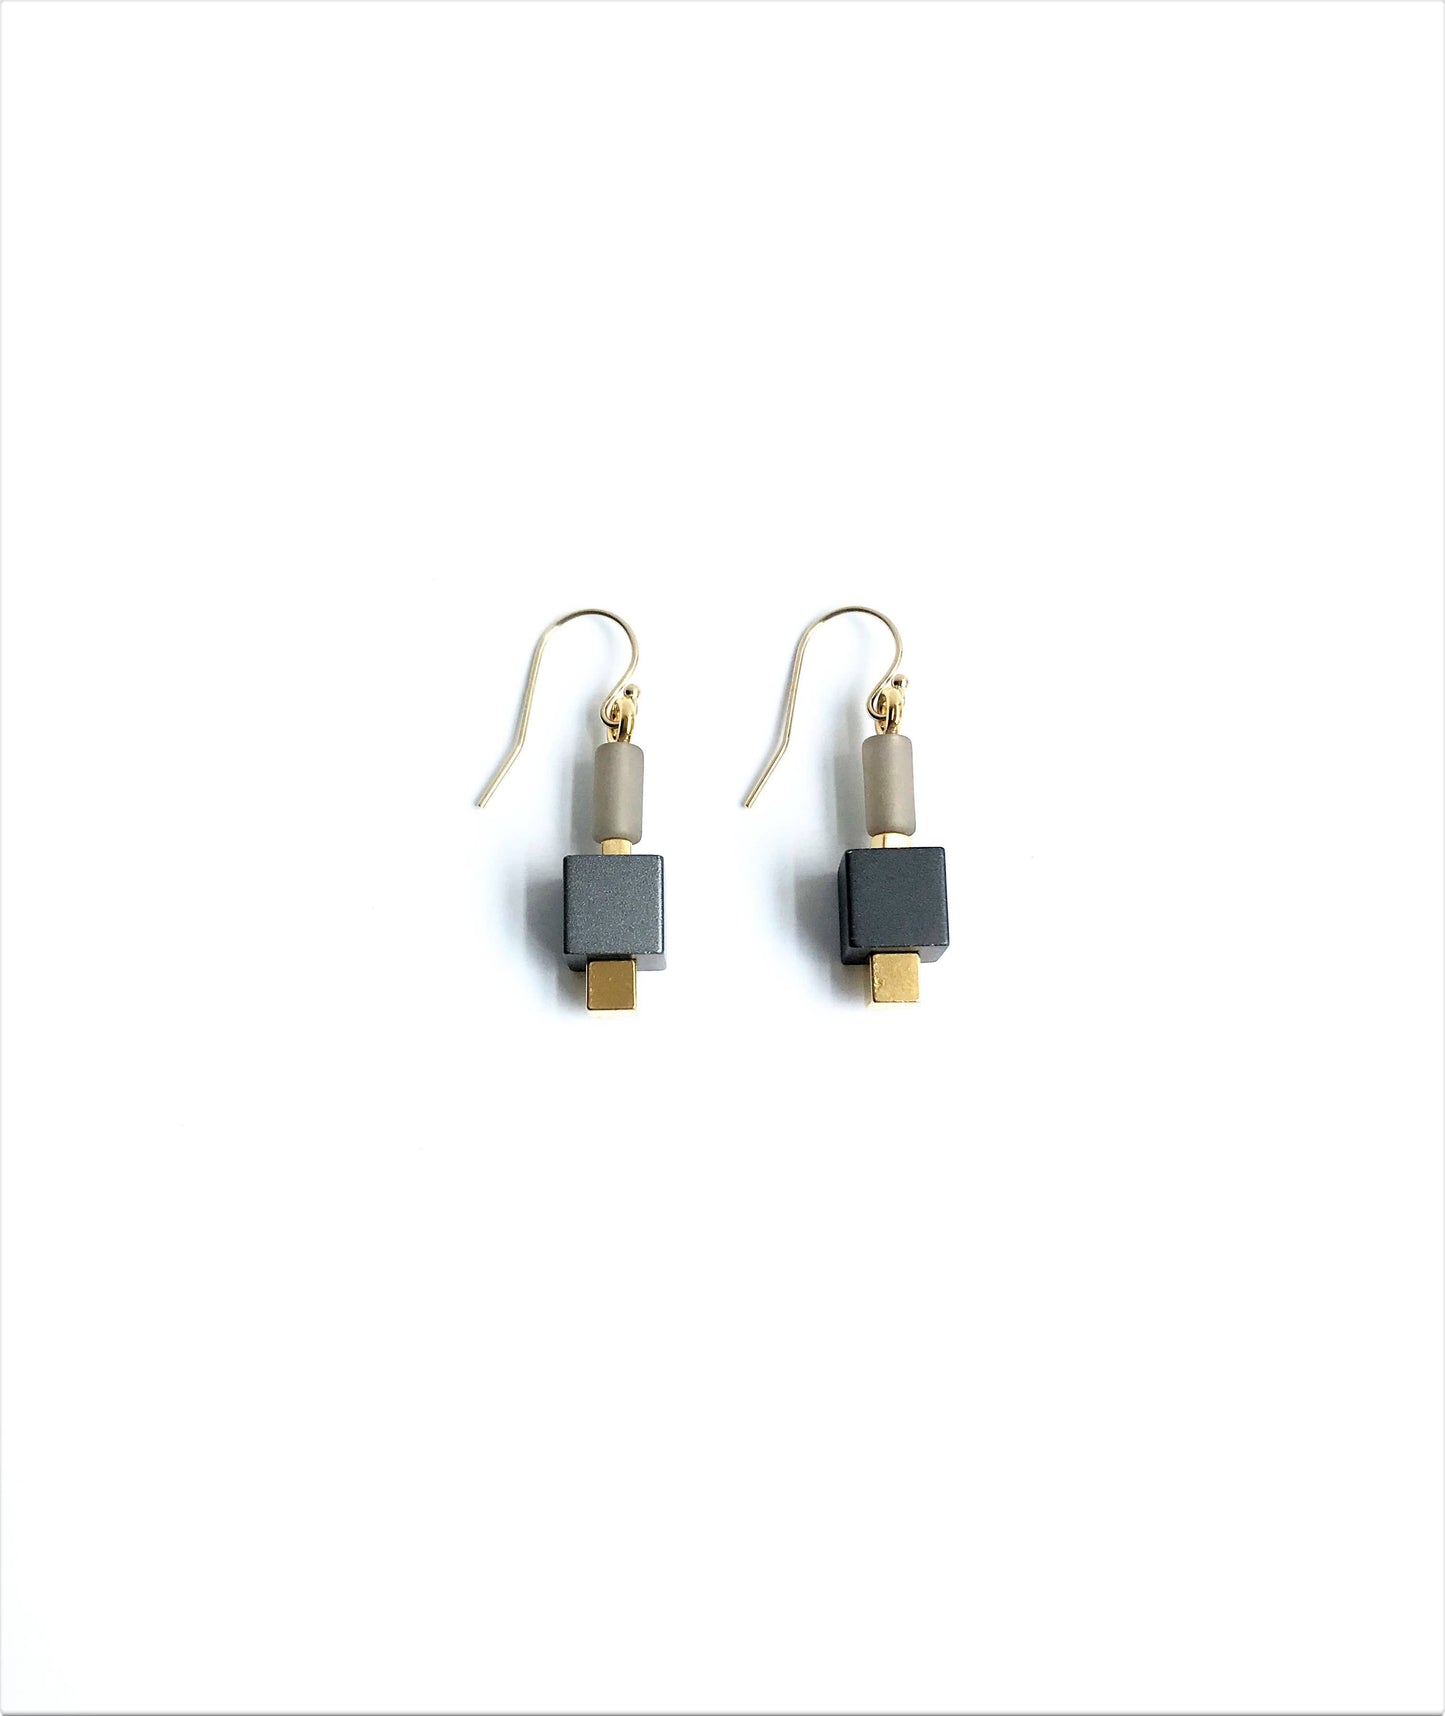 Cube earrings: Indigo